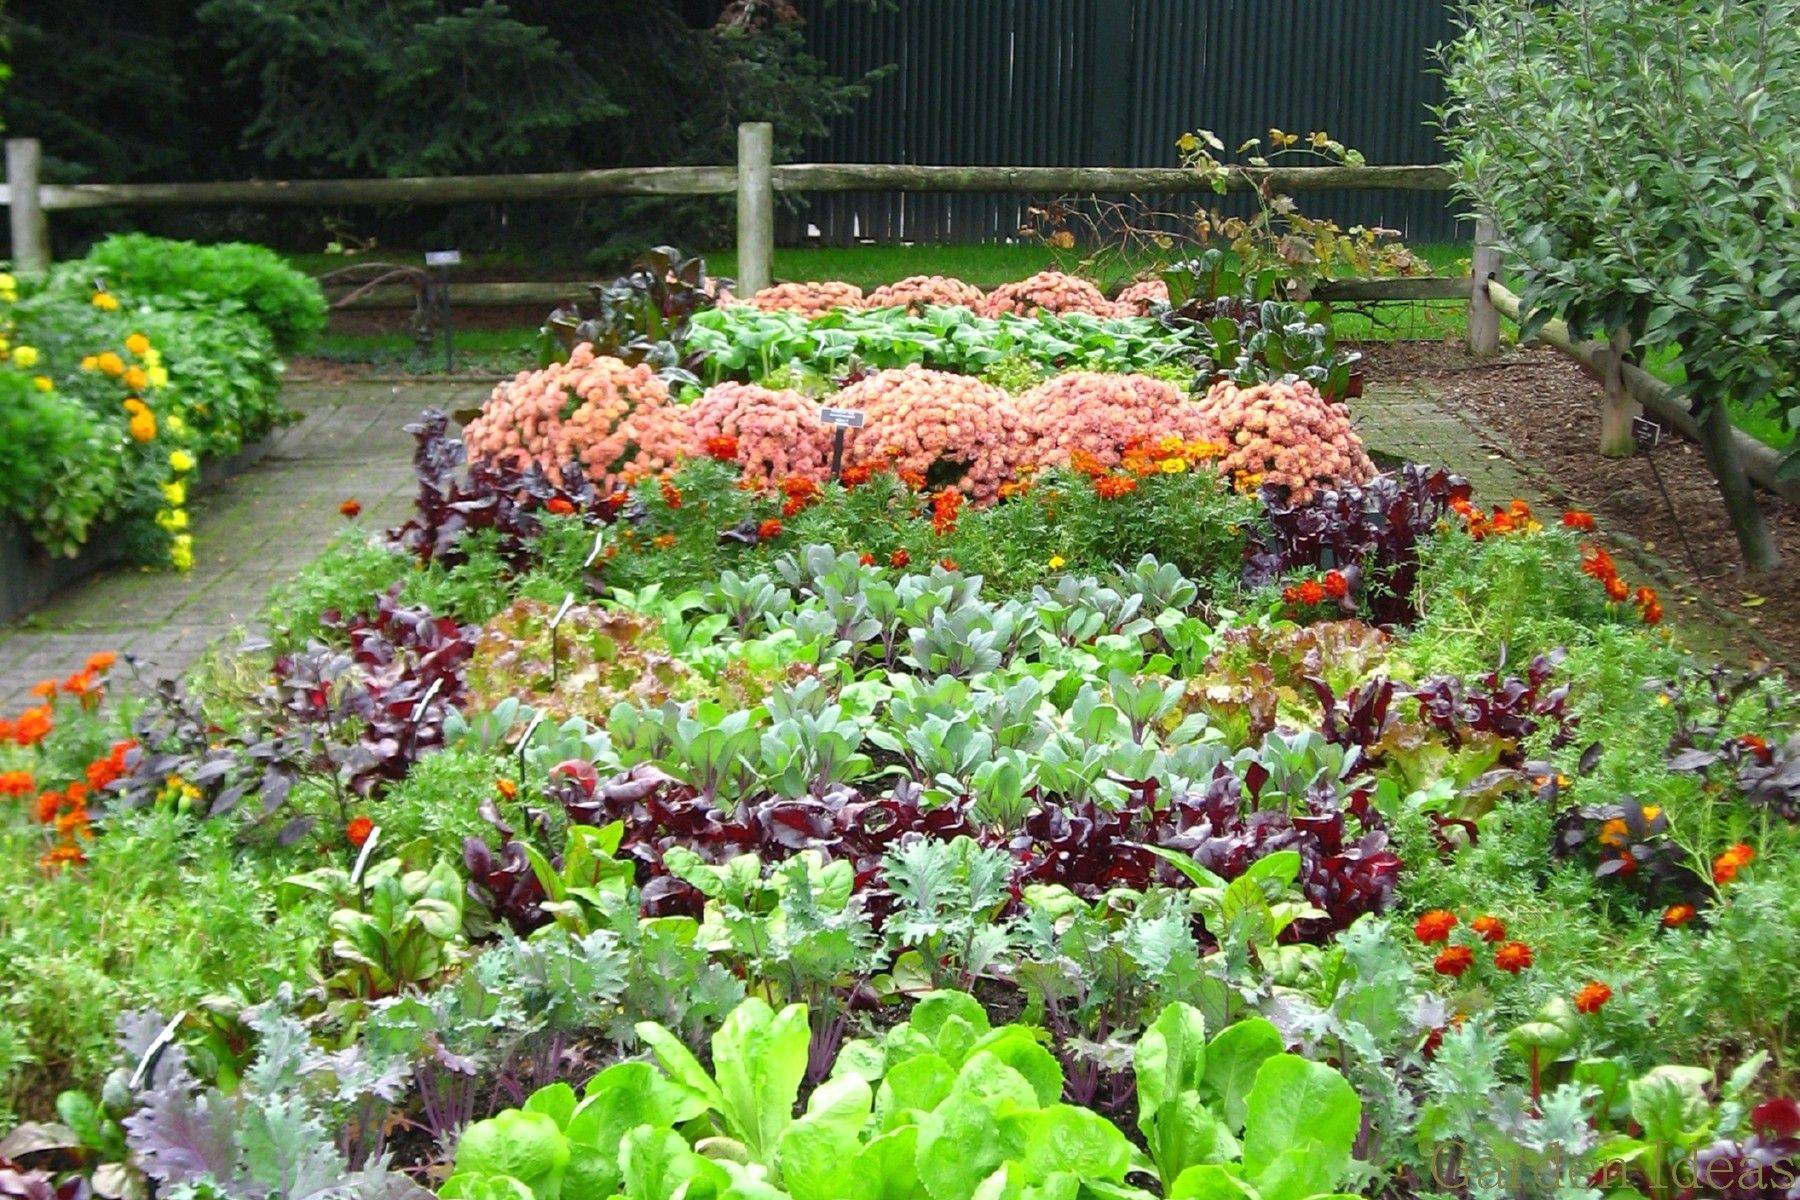 Marvelous Fall Container Garden Ideas